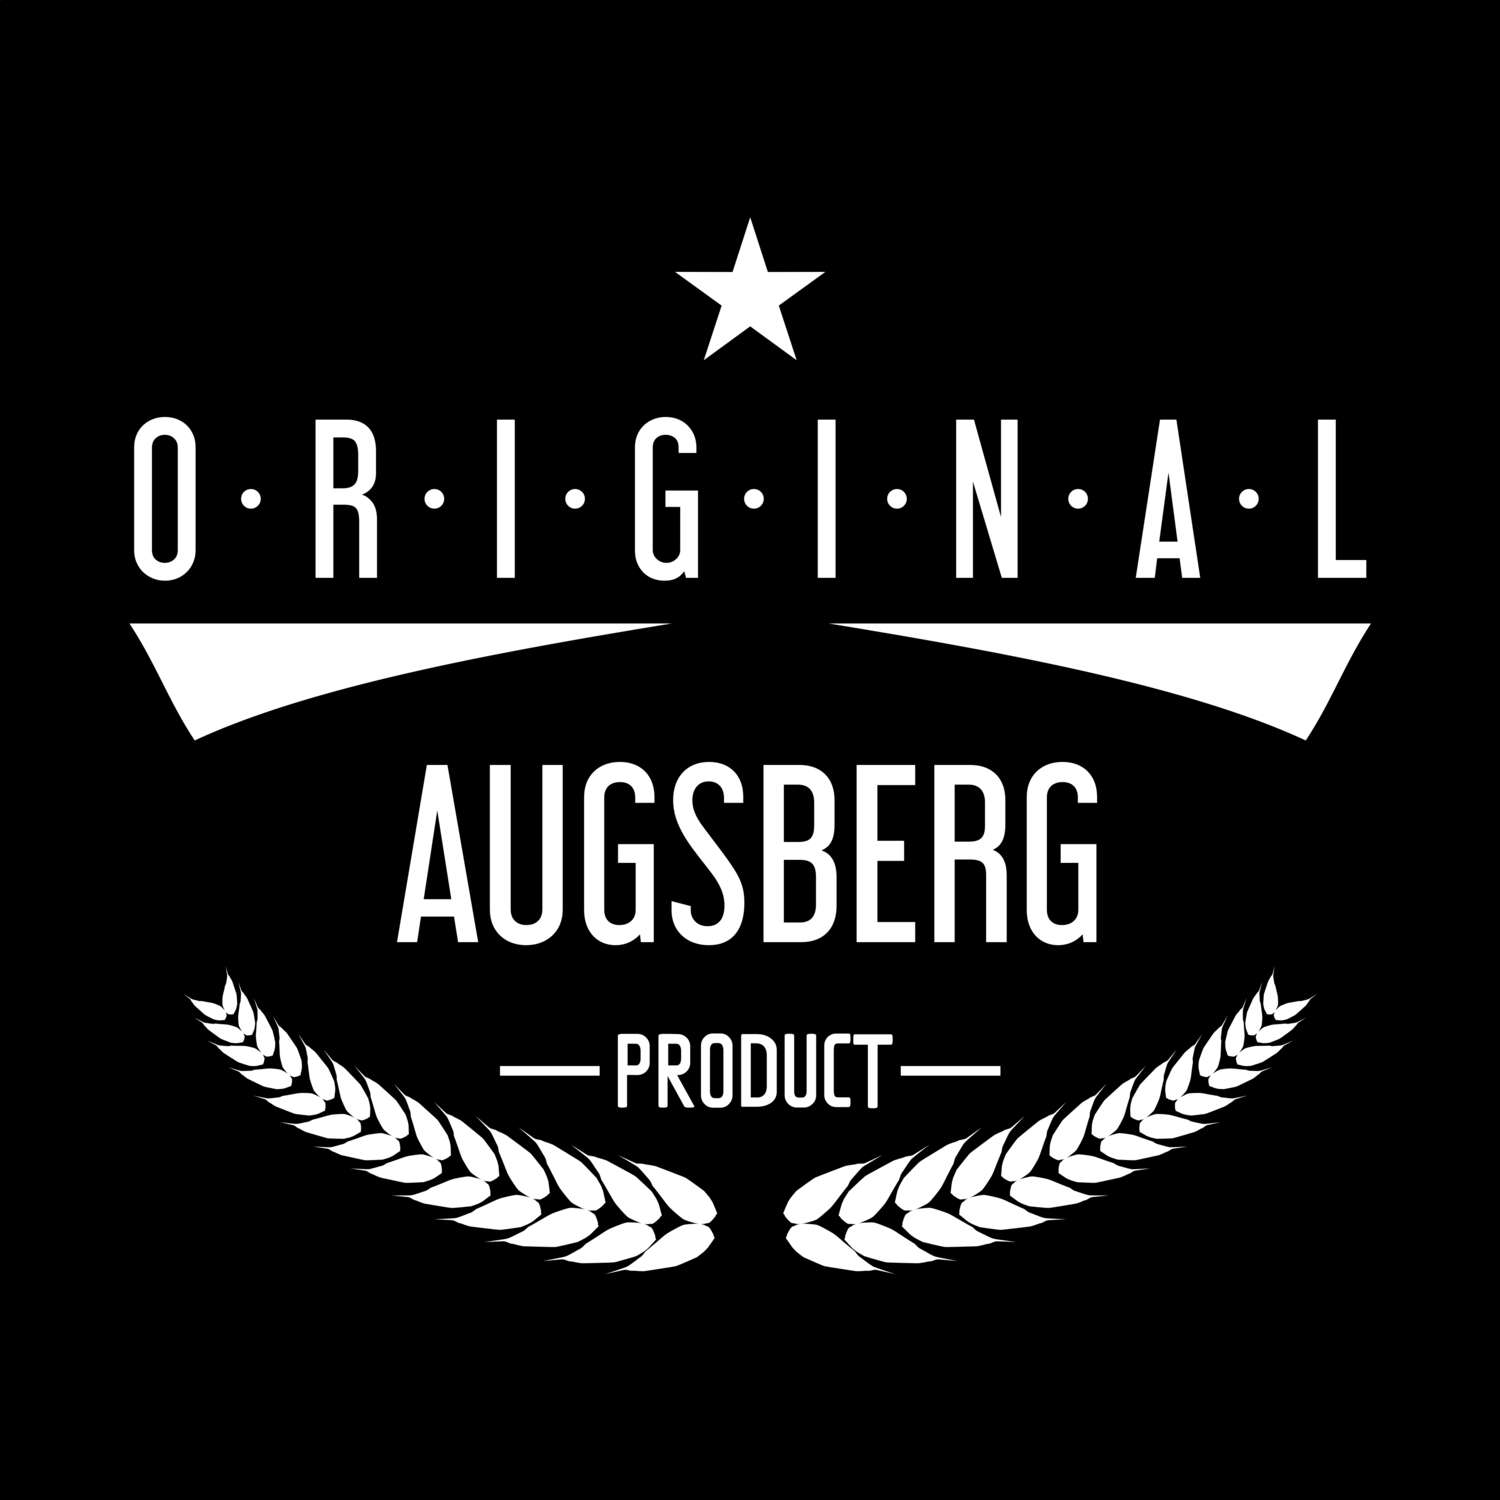 Augsberg T-Shirt »Original Product«